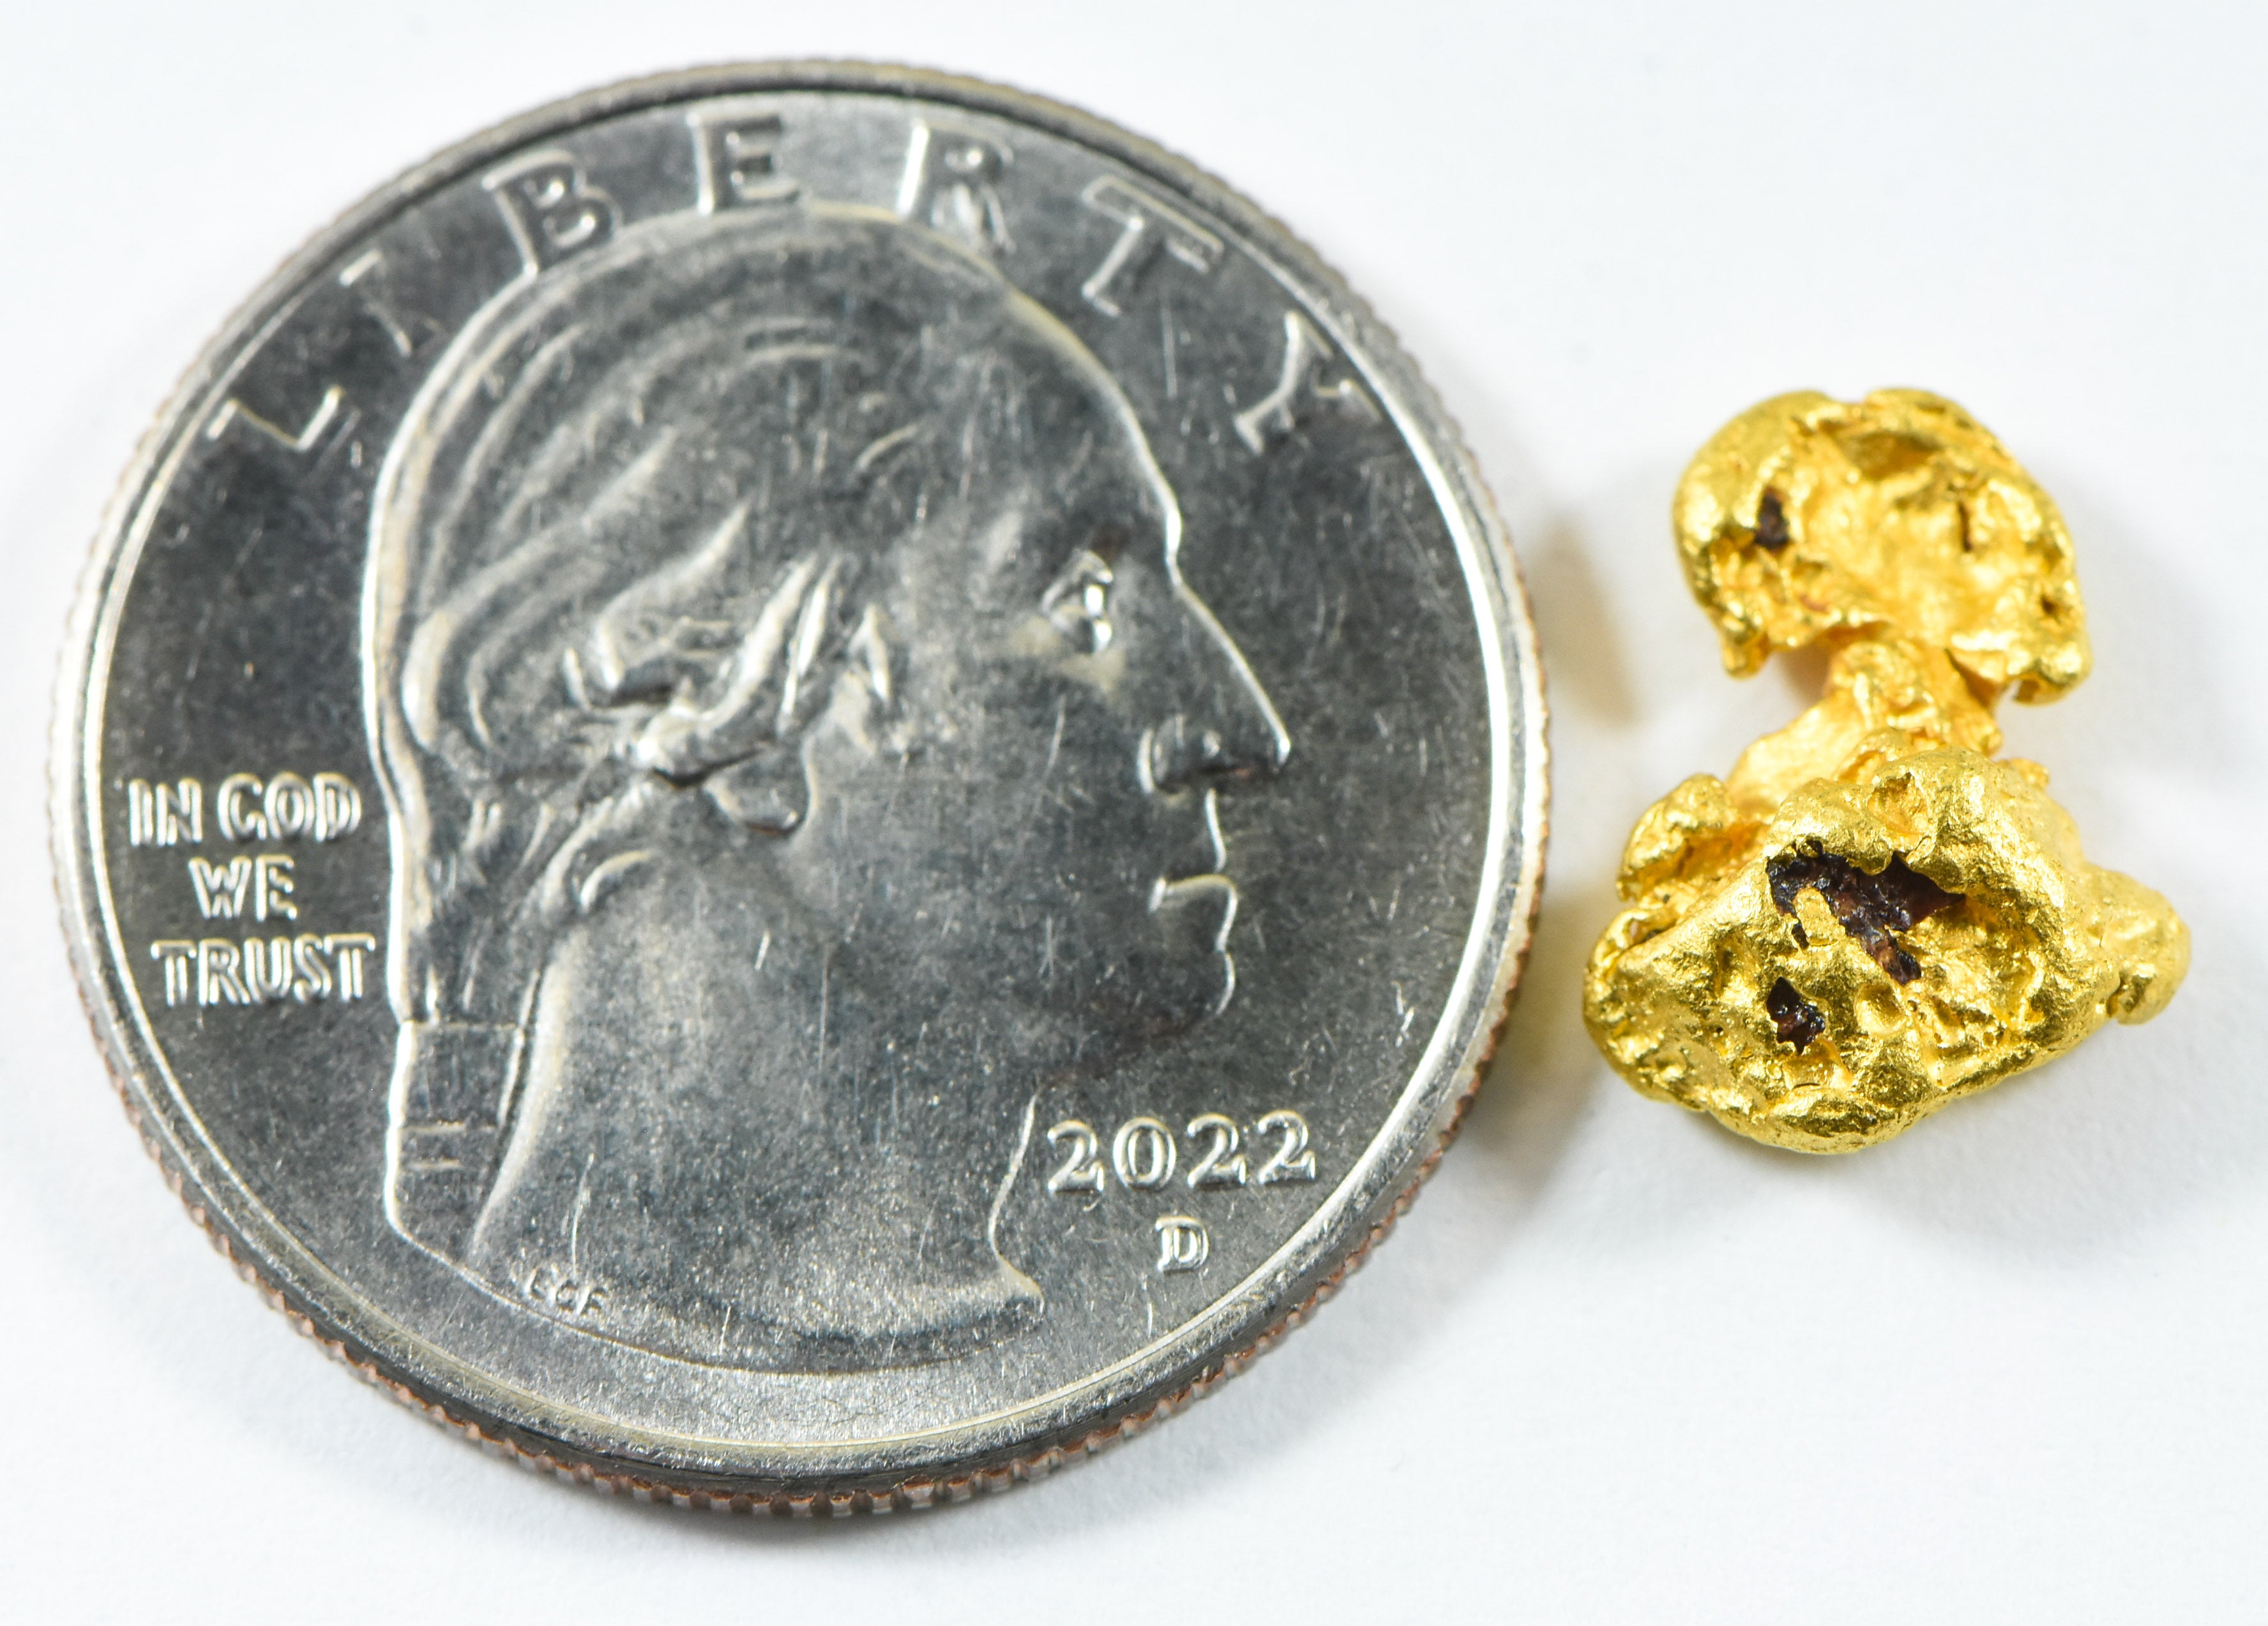 #946 Natural Gold Nugget Australian 2.52 Grams Genuine